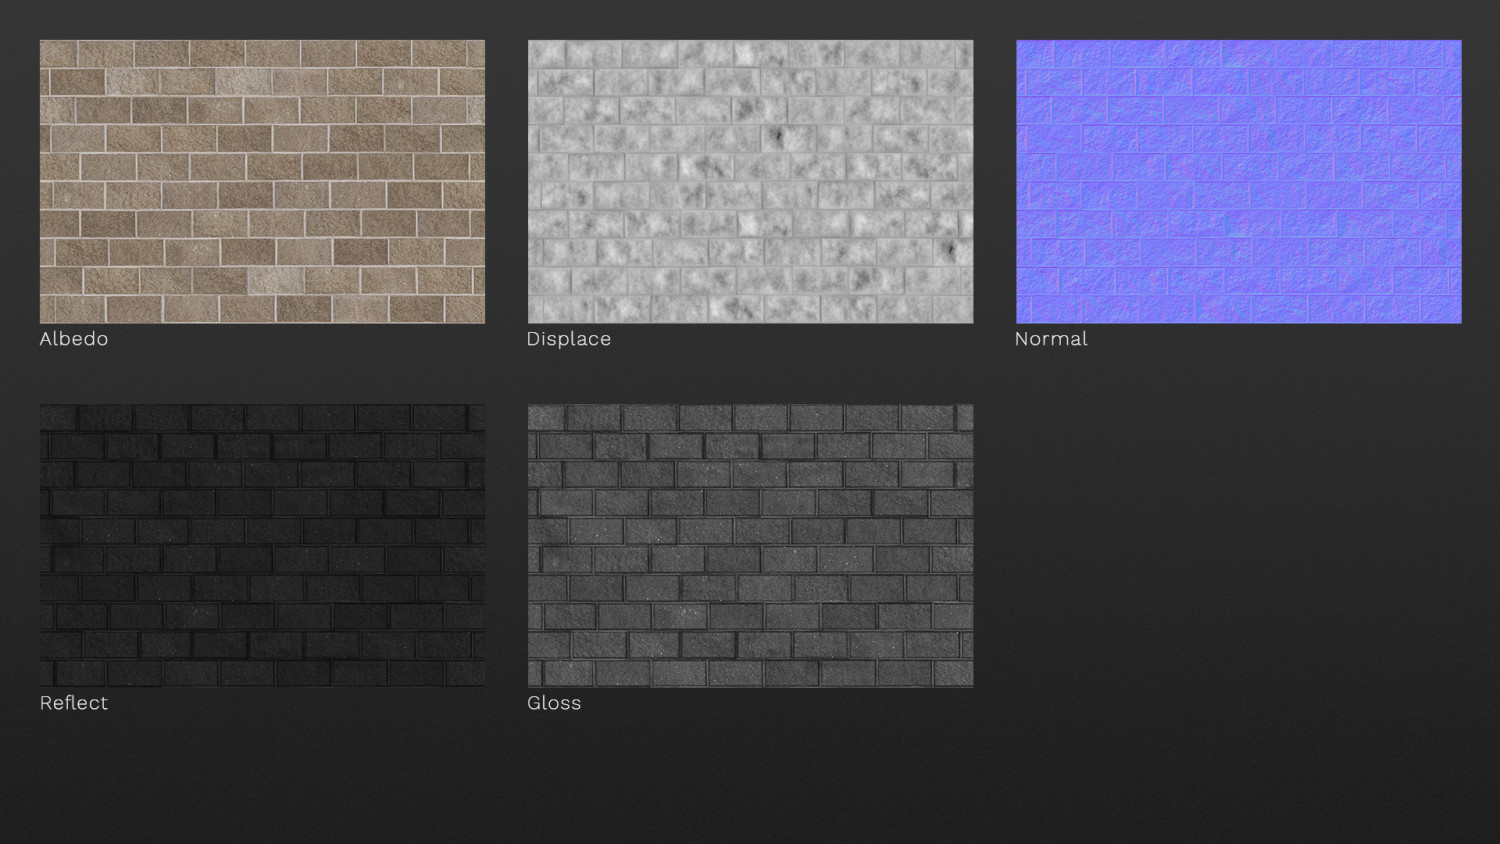 Concrete bricks texture